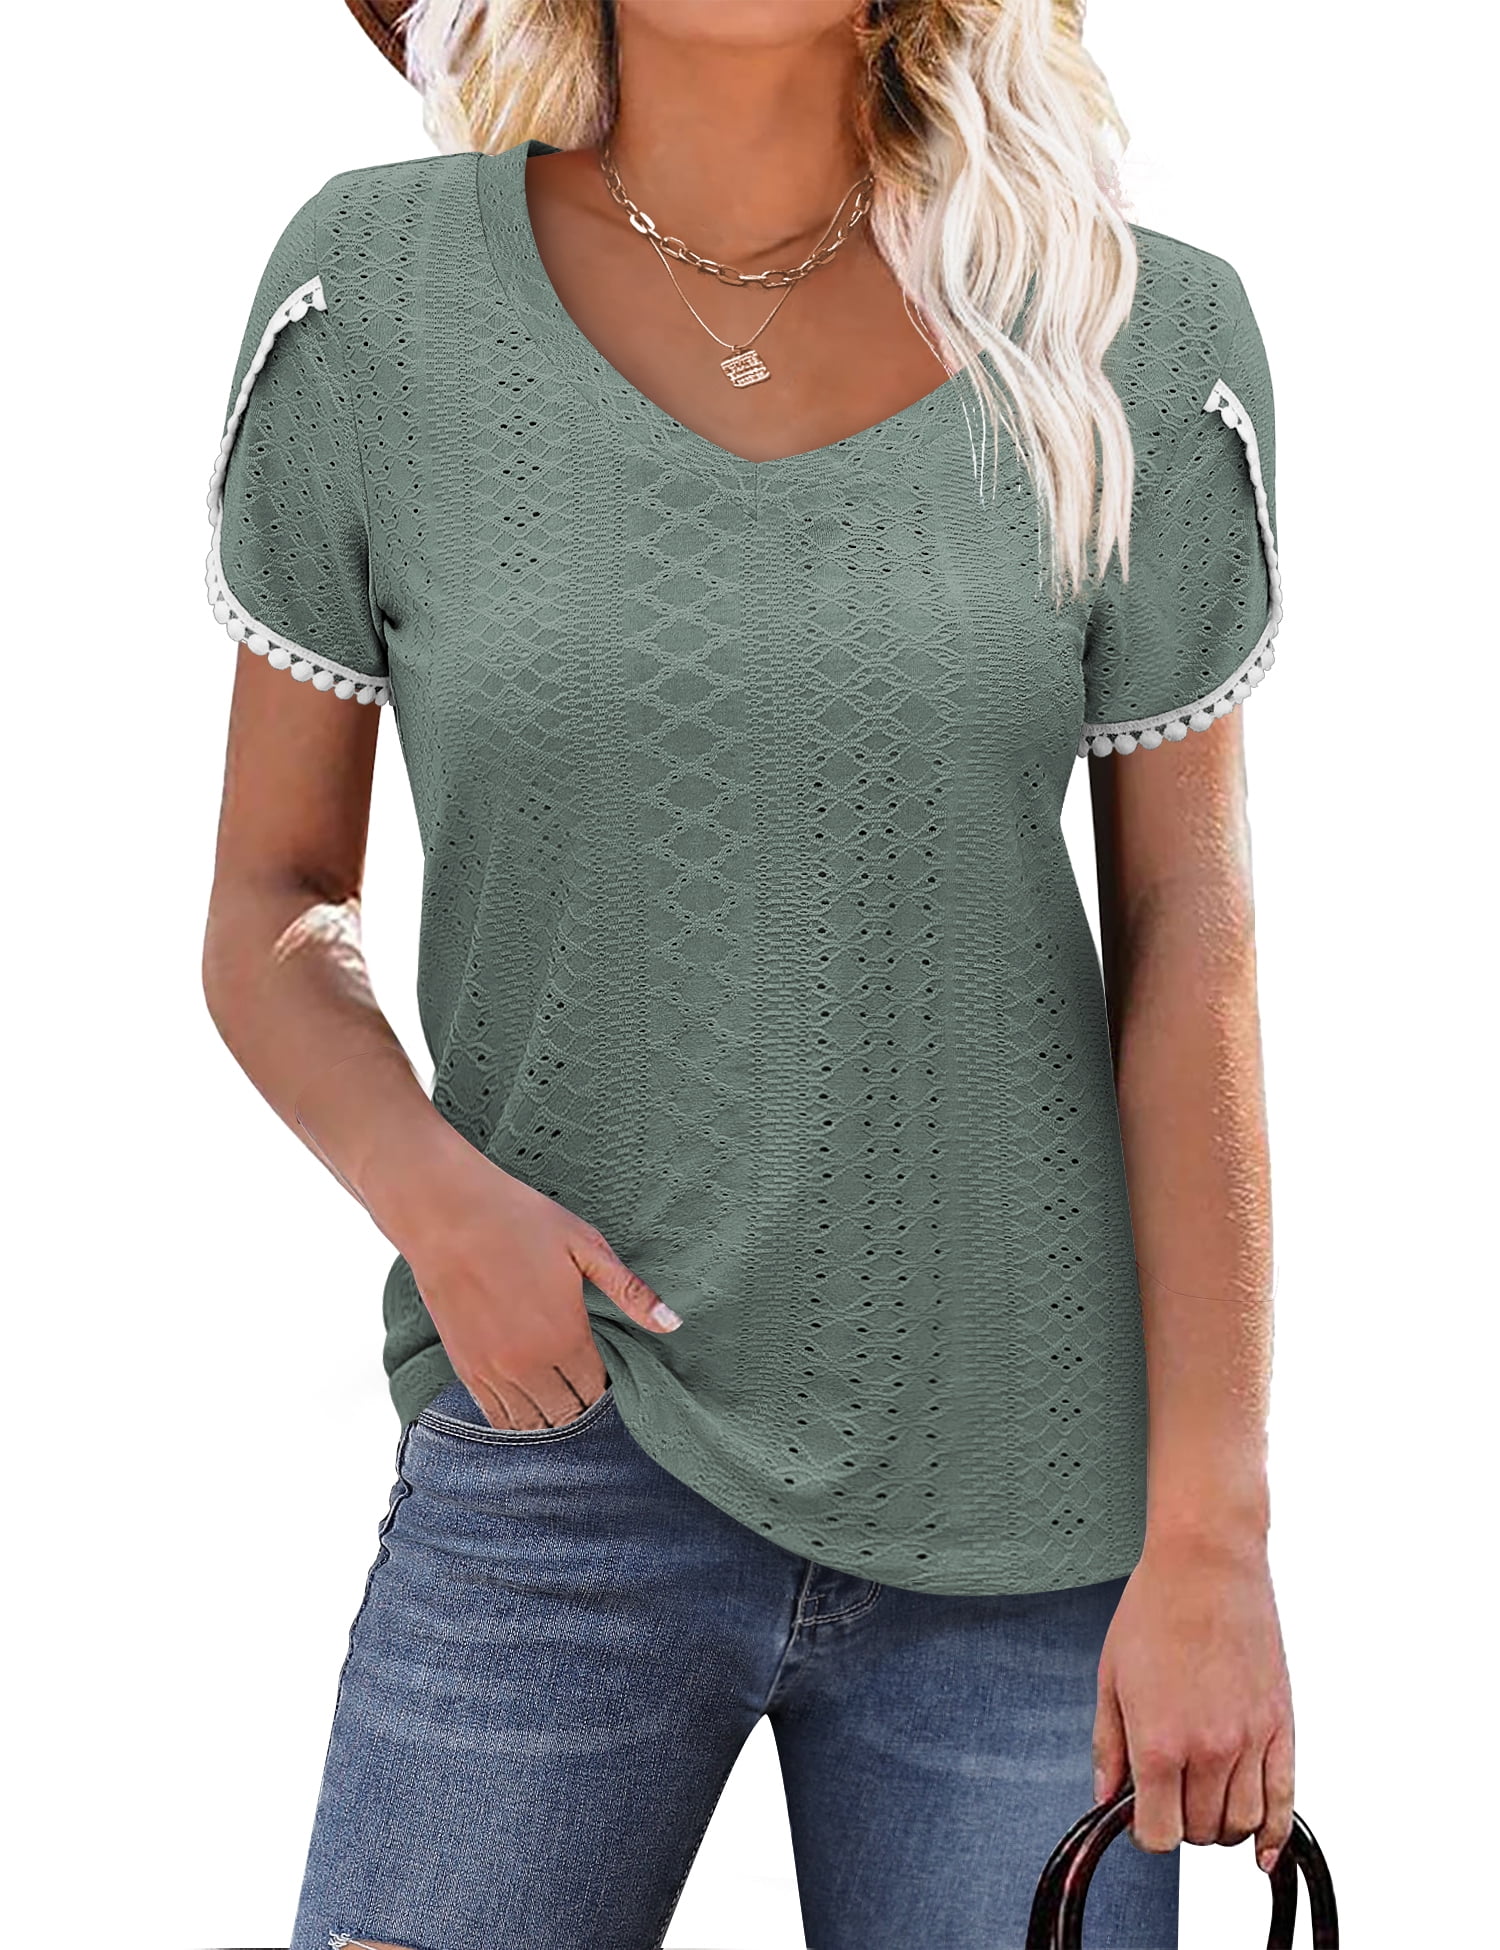 OmicGot Womens Summer Tops V Neck T-Shirts Lace Crochet Short Sleeve ...